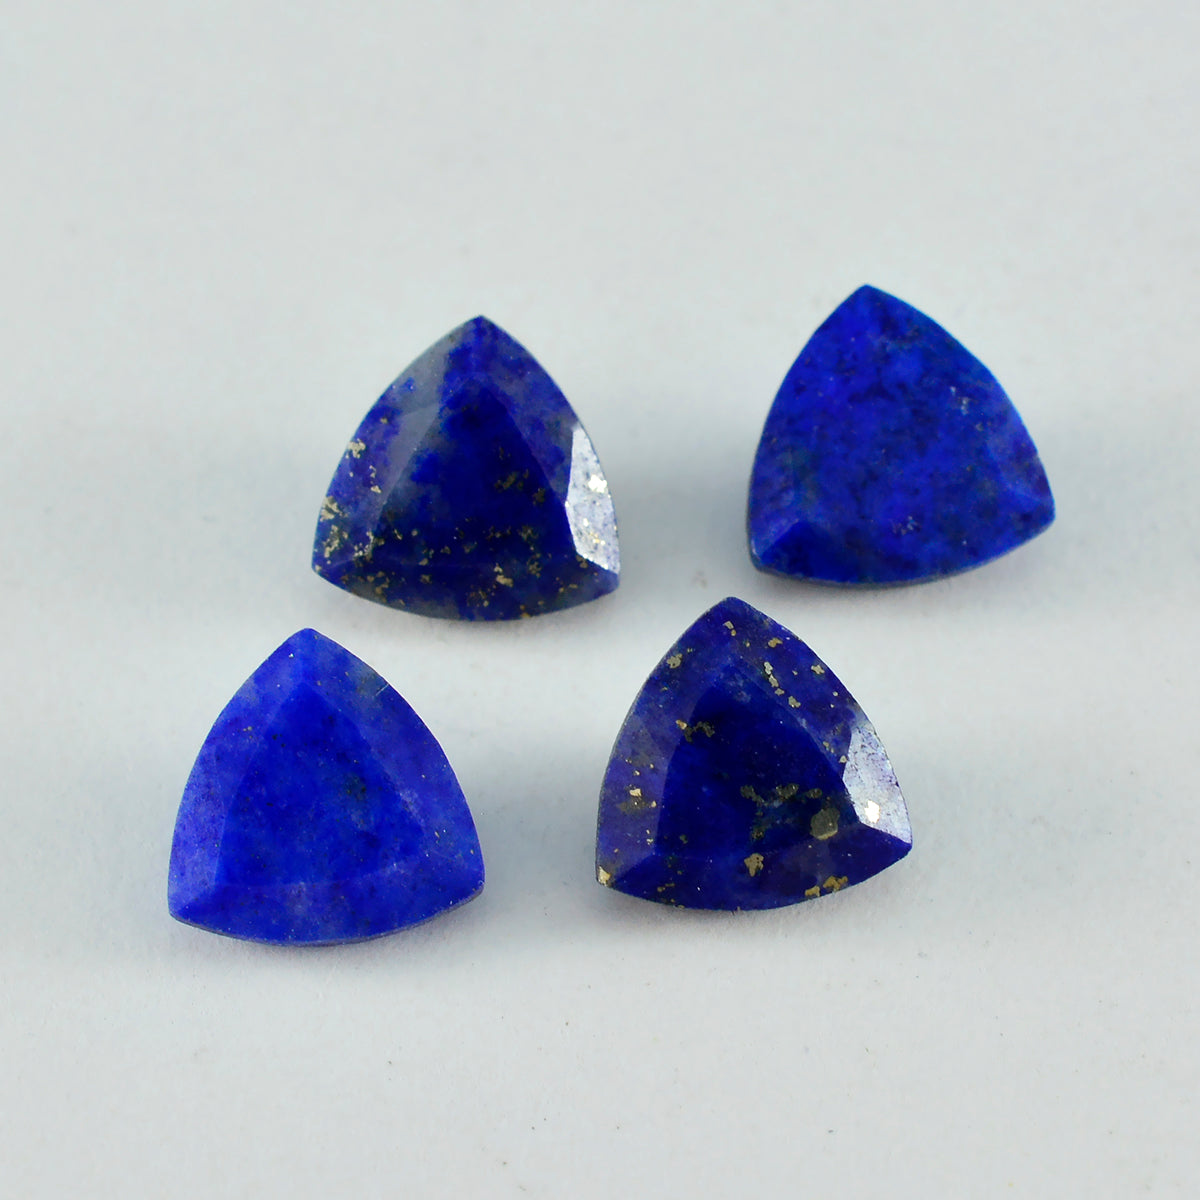 Riyogems 1PC Natuurlijke Blauwe Lapis Lazuli Facet 14x14 mm Biljoen Vorm A+1 Kwaliteit Losse Edelsteen